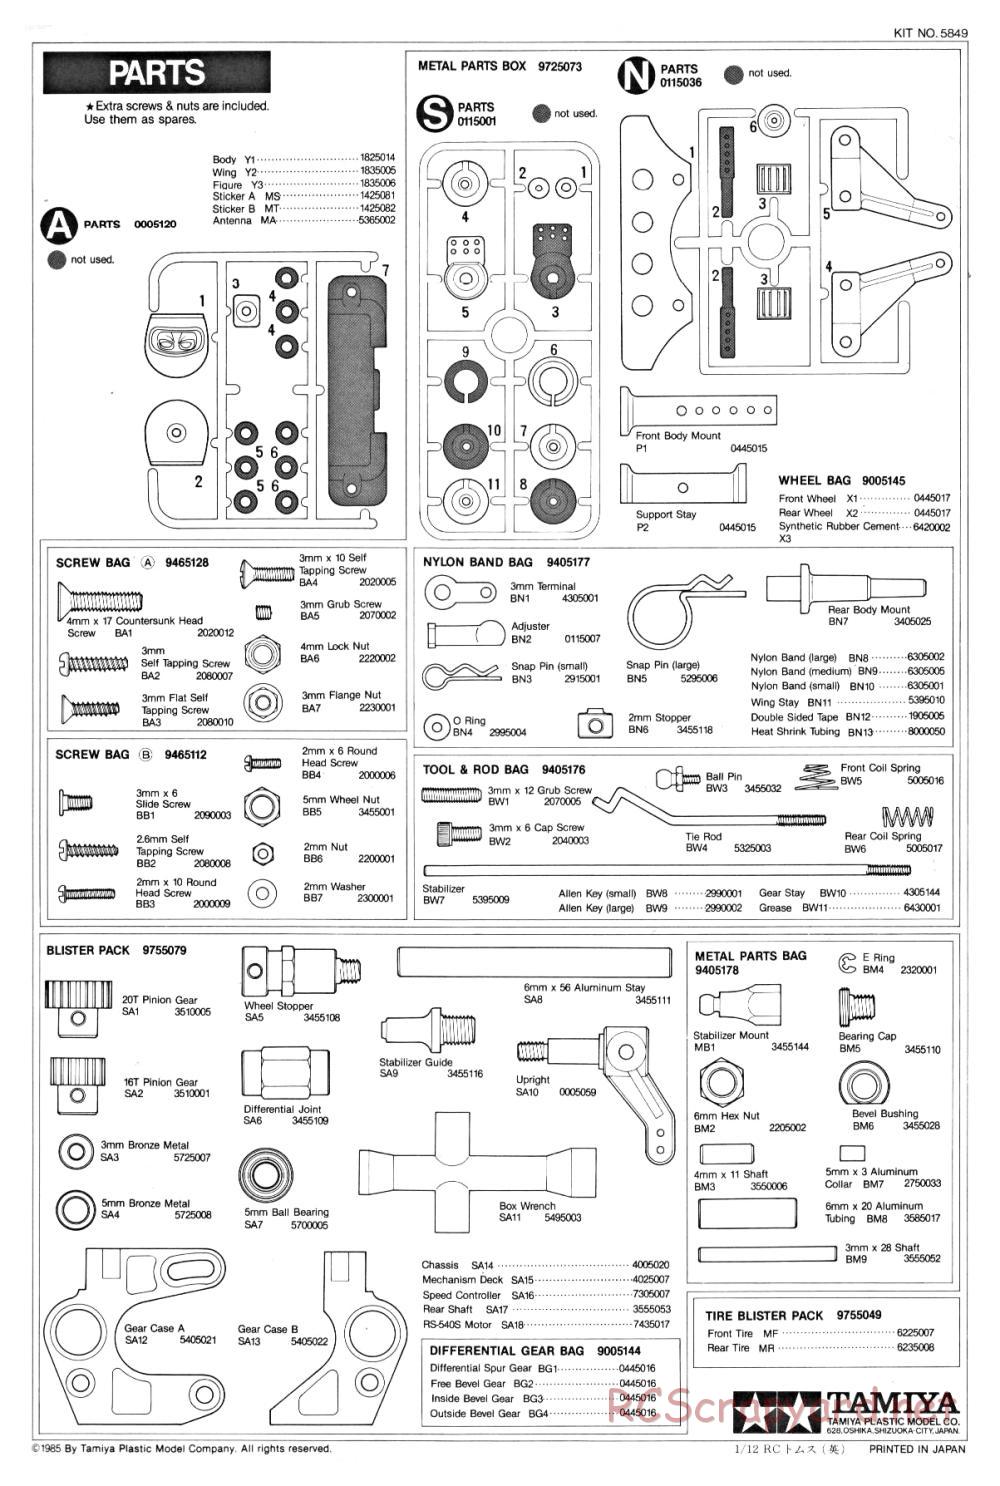 Tamiya - Toyota Tom's 84C - RM MK.6 - 58049 - Manual - Page 16